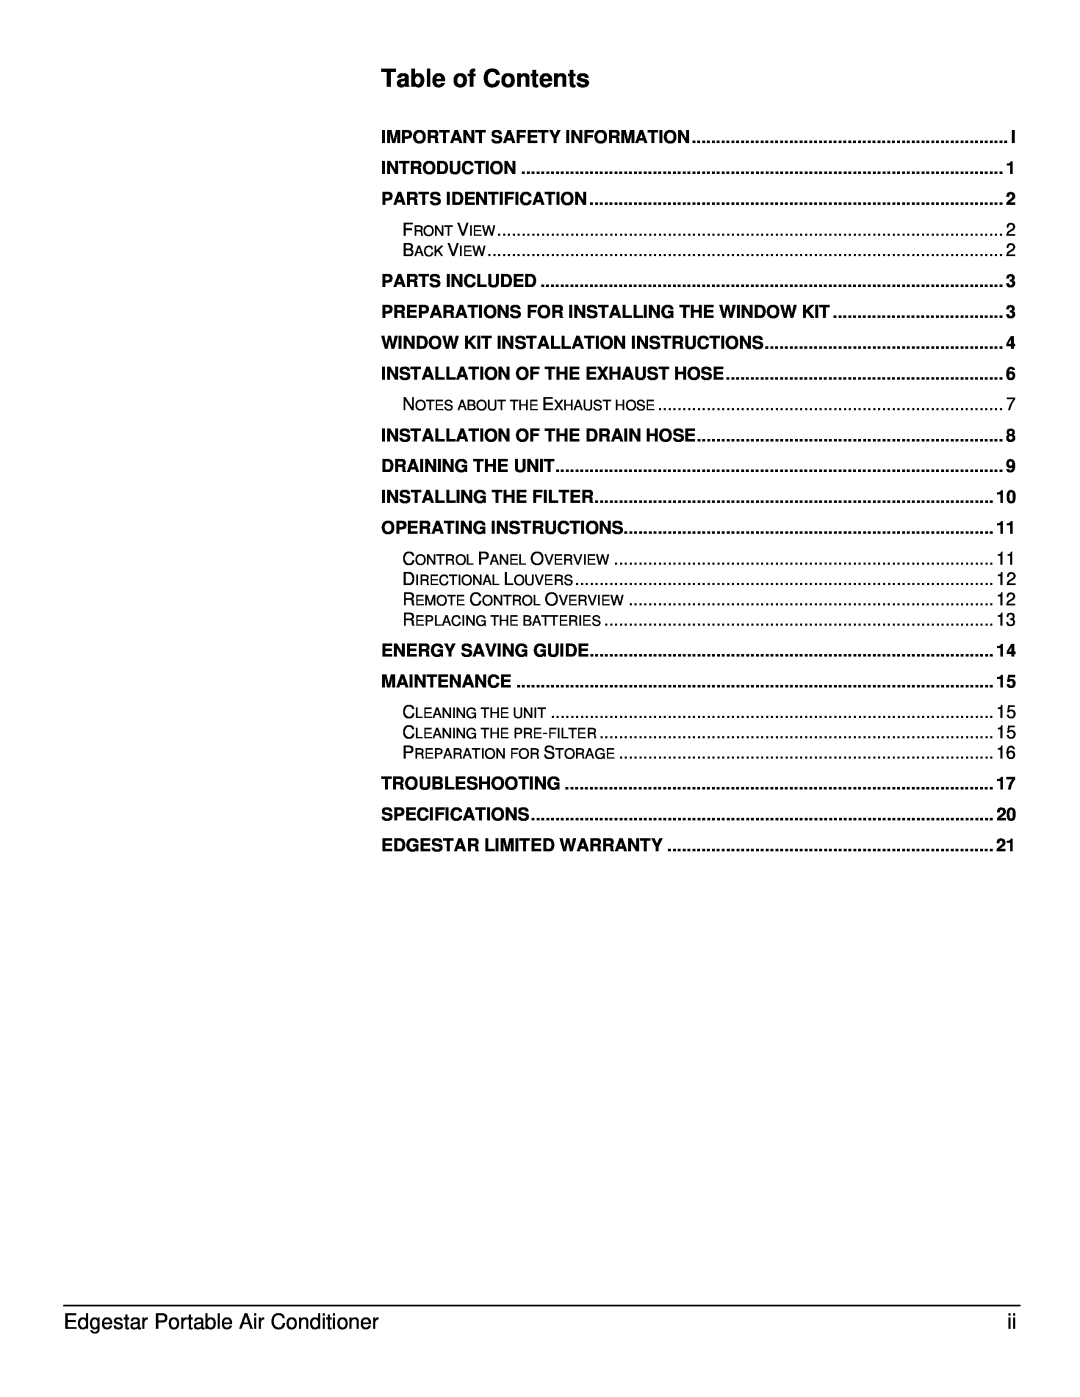 EdgeStar AP10002BL owner manual Table of Contents, Edgestar Portable Air Conditioner 